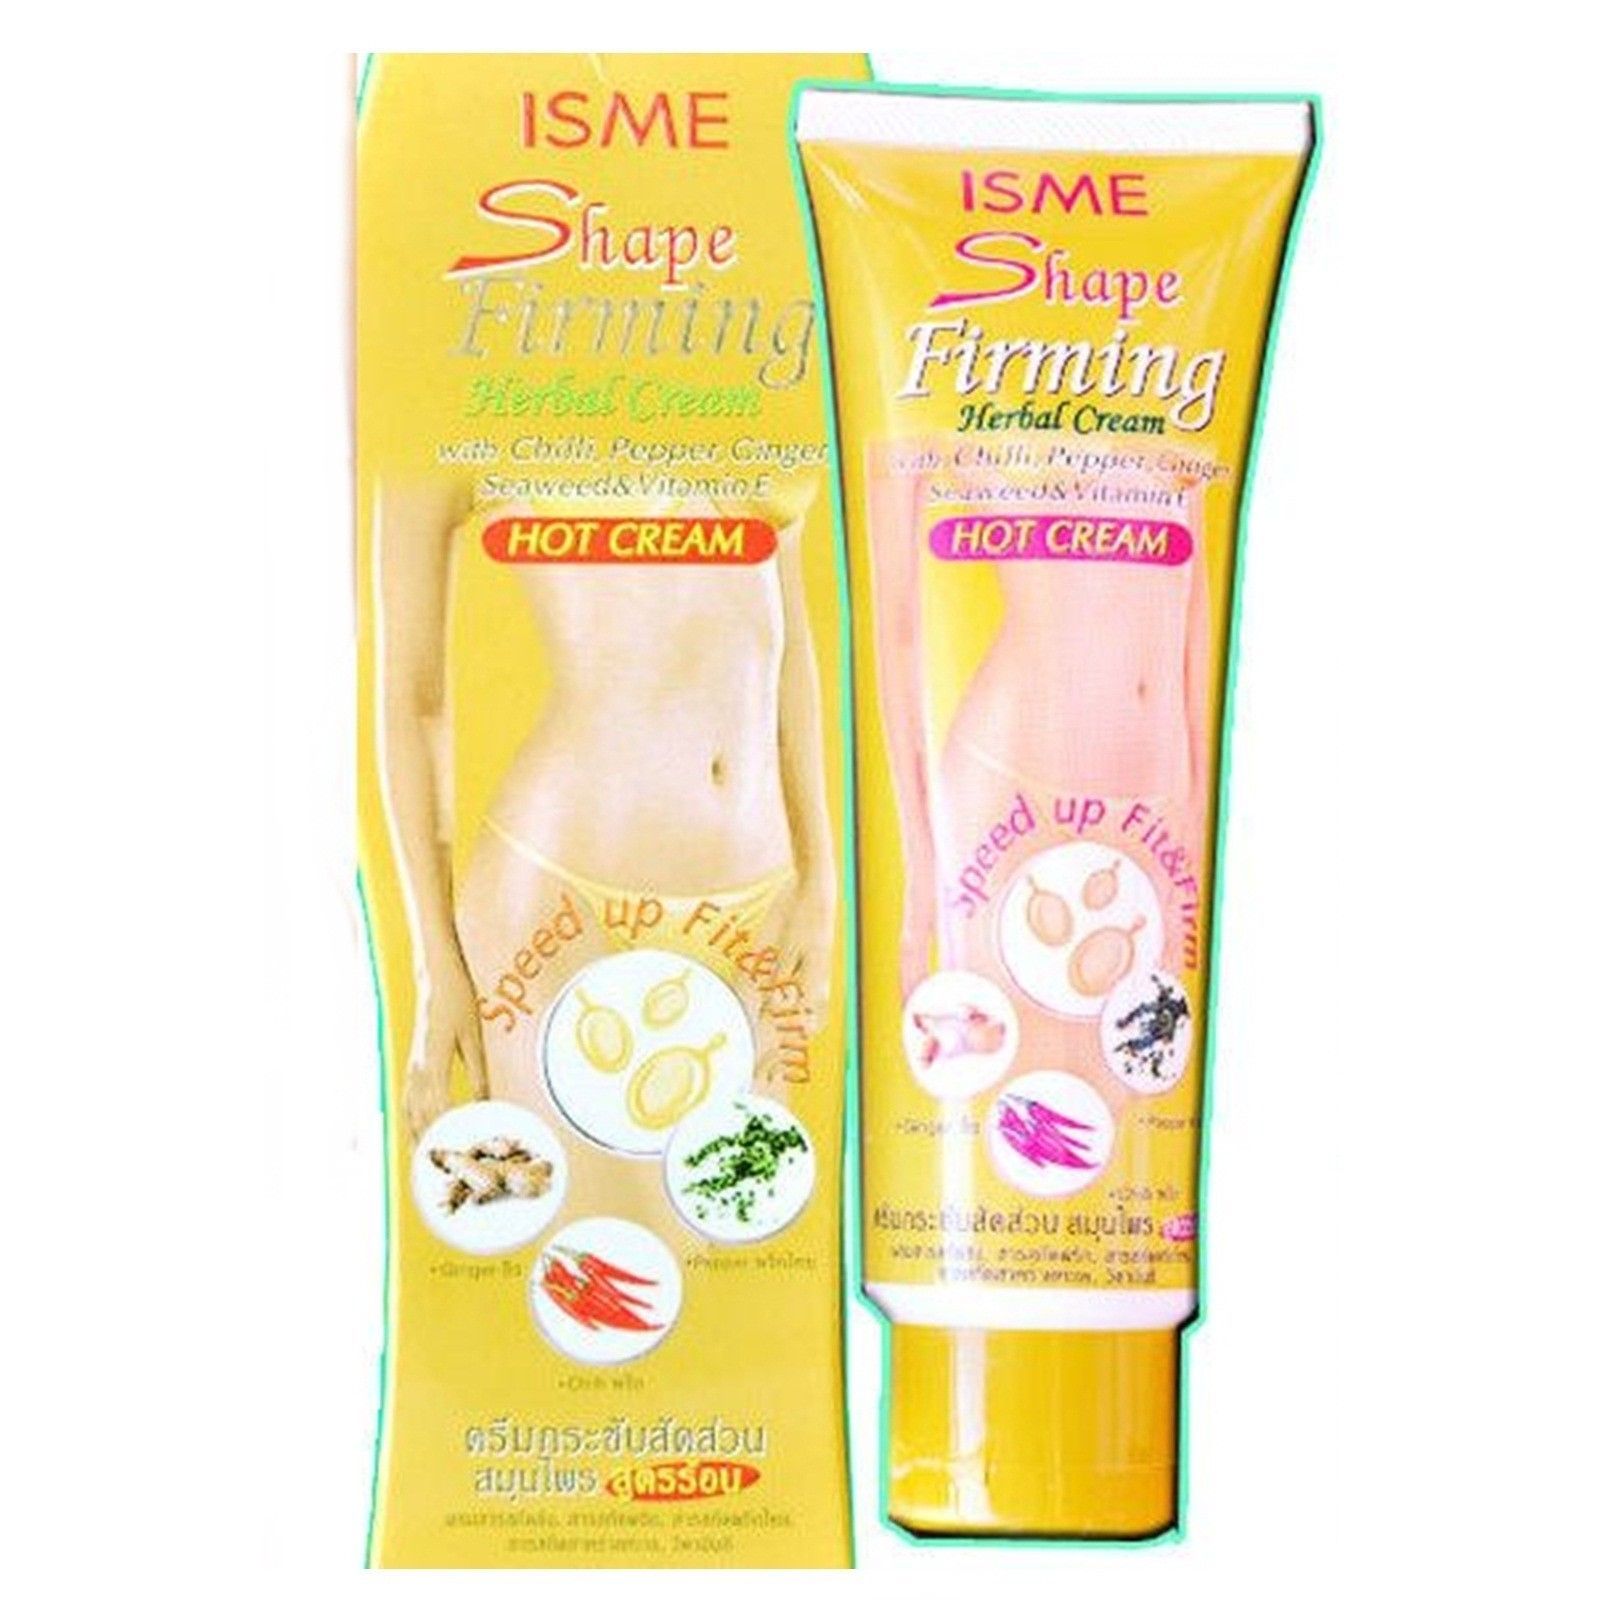 1 Tube Isme Shape Firming Herbal Cream Body HOT Cream Anti-Cellulite 120 ml - $24.99